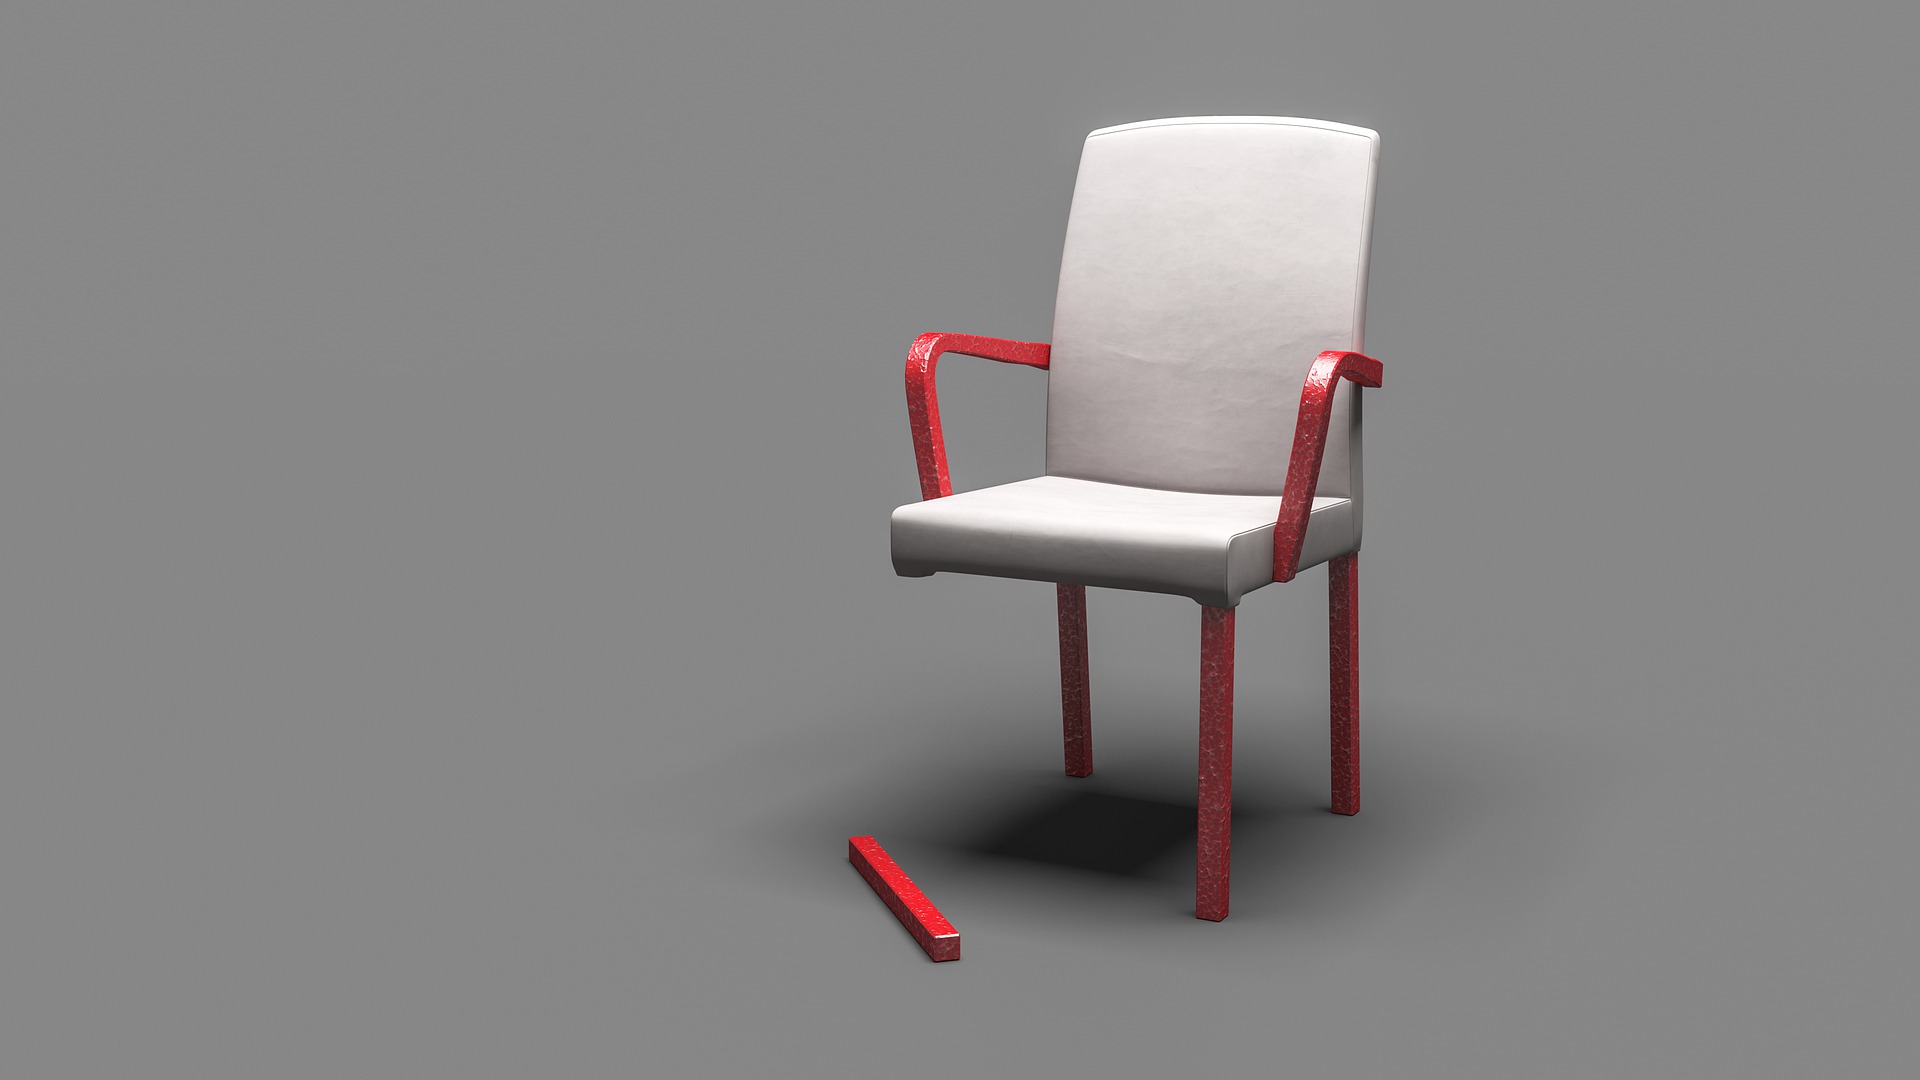 Breaks chair. Сломанный стул. Стул без ножки. Разломанный стул. Злой стул.